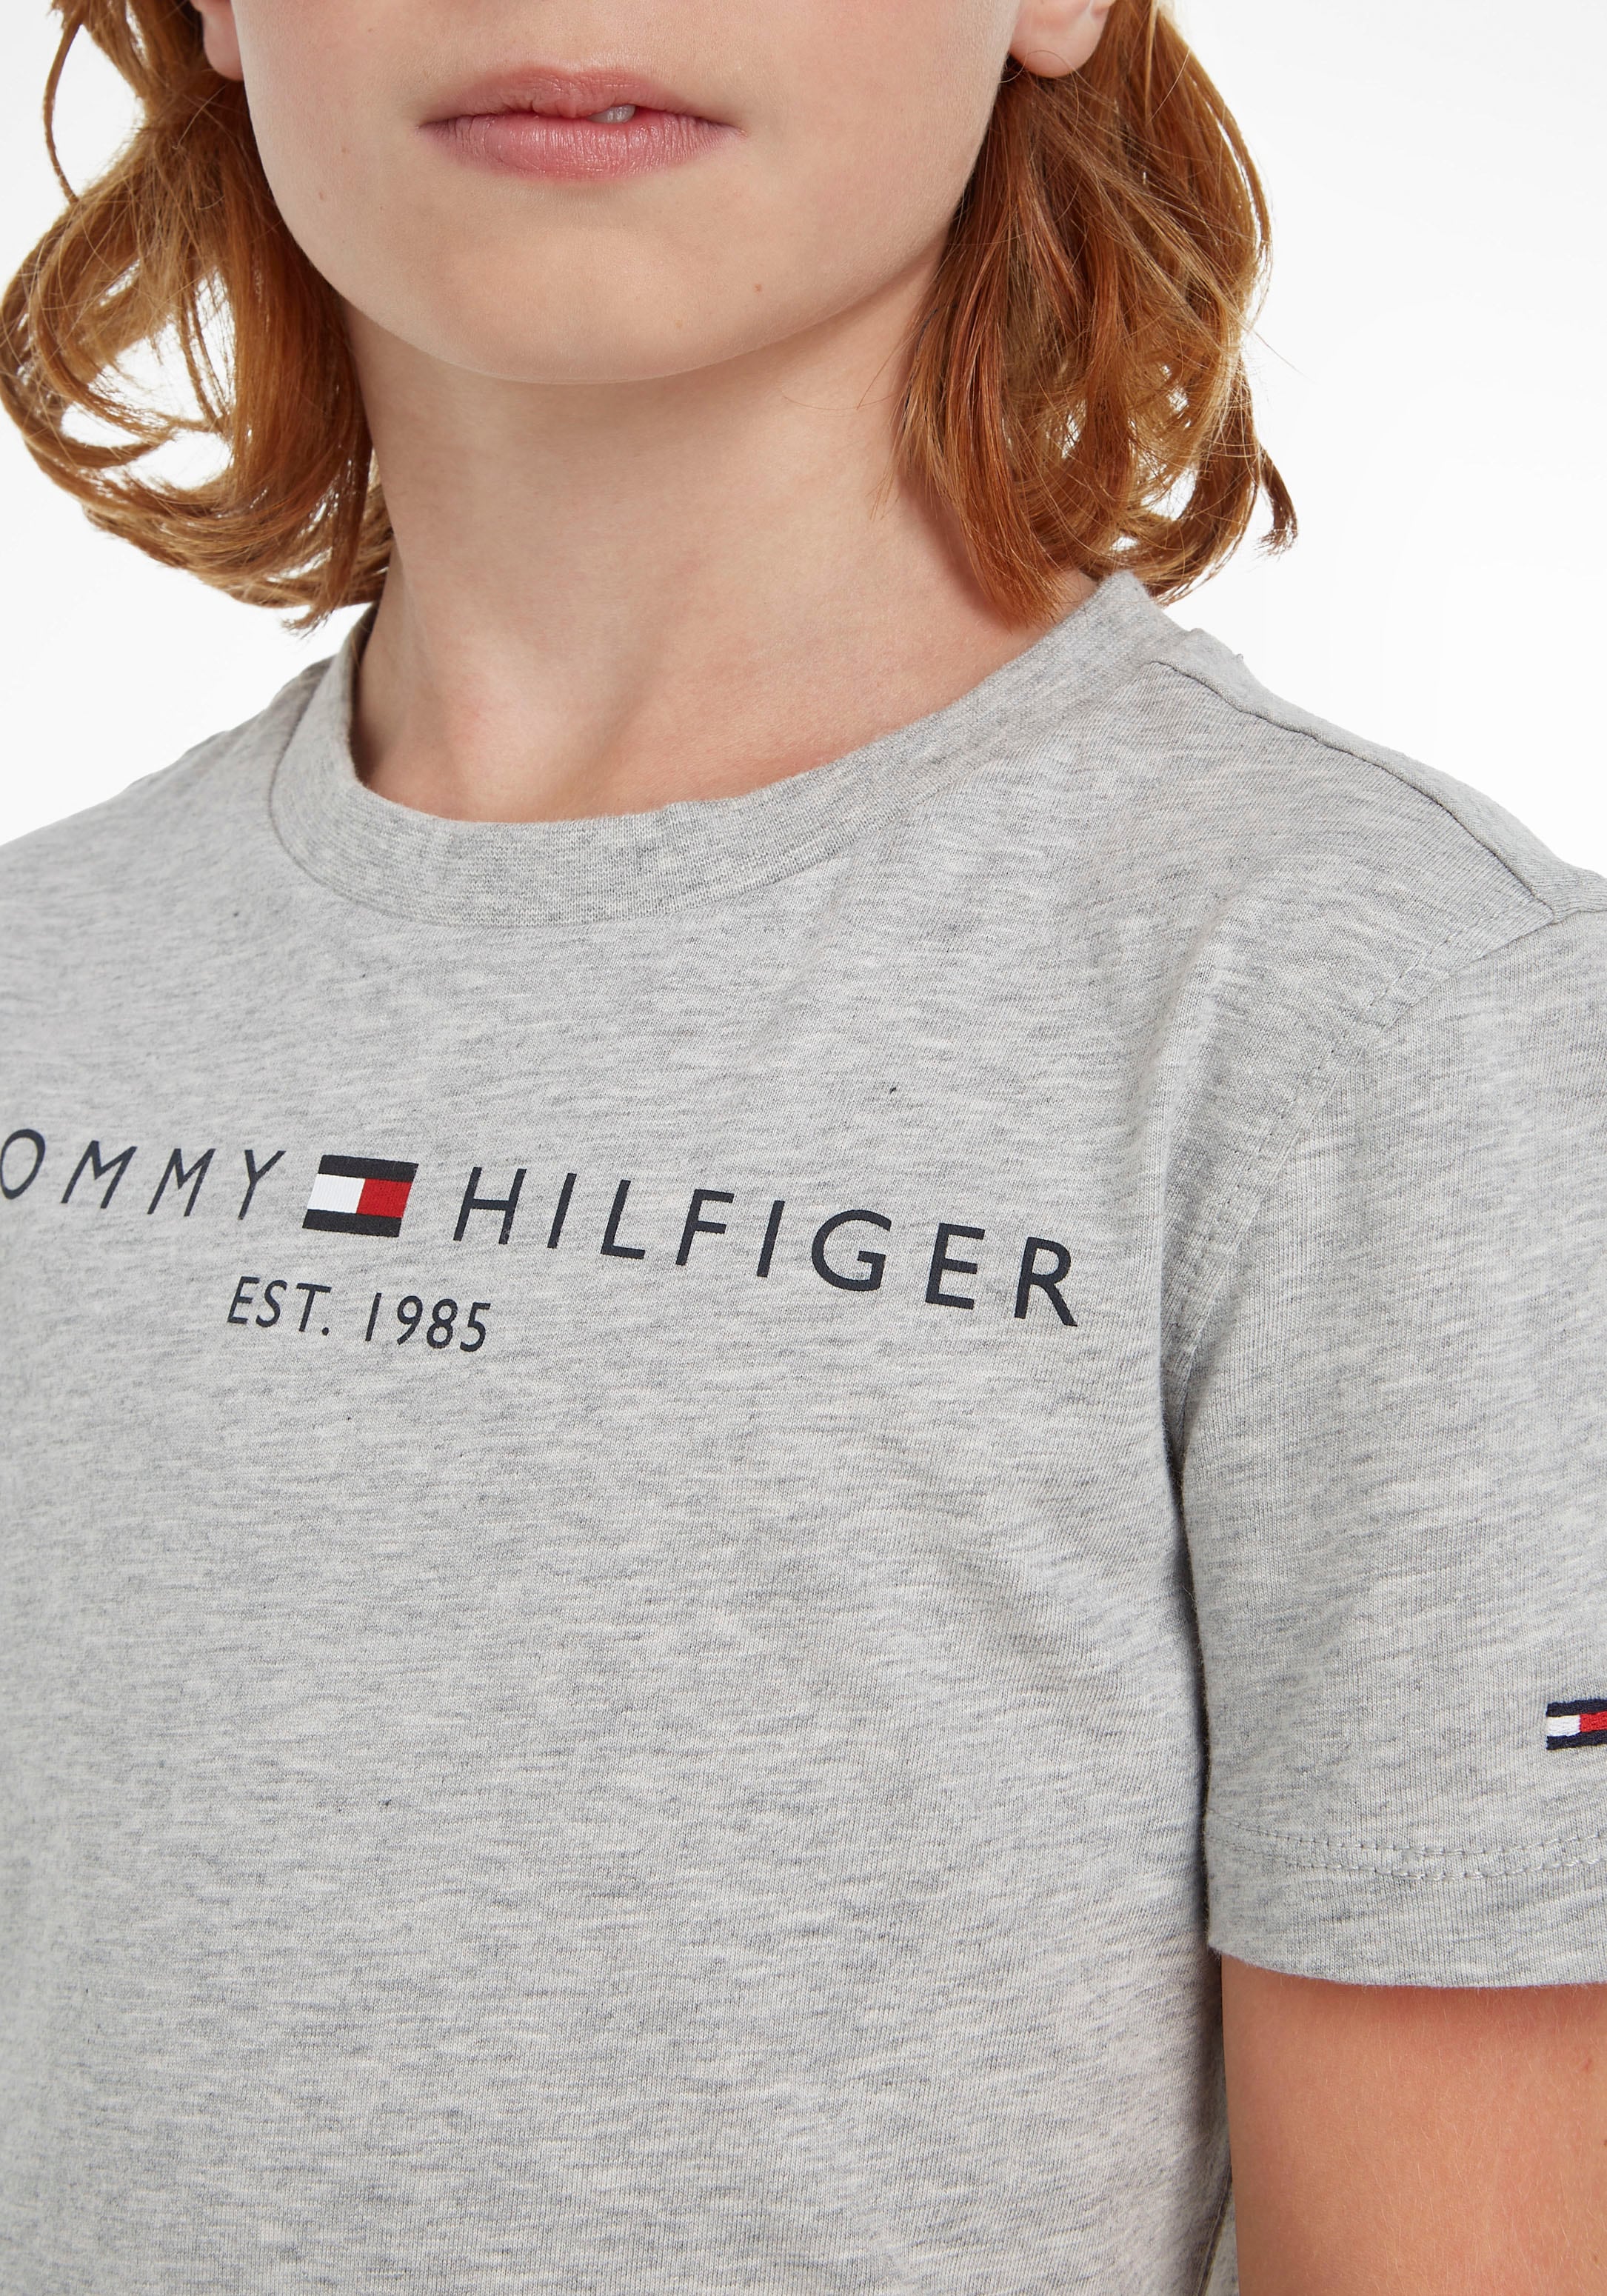 Tommy Hilfiger T-Shirt bei OTTO